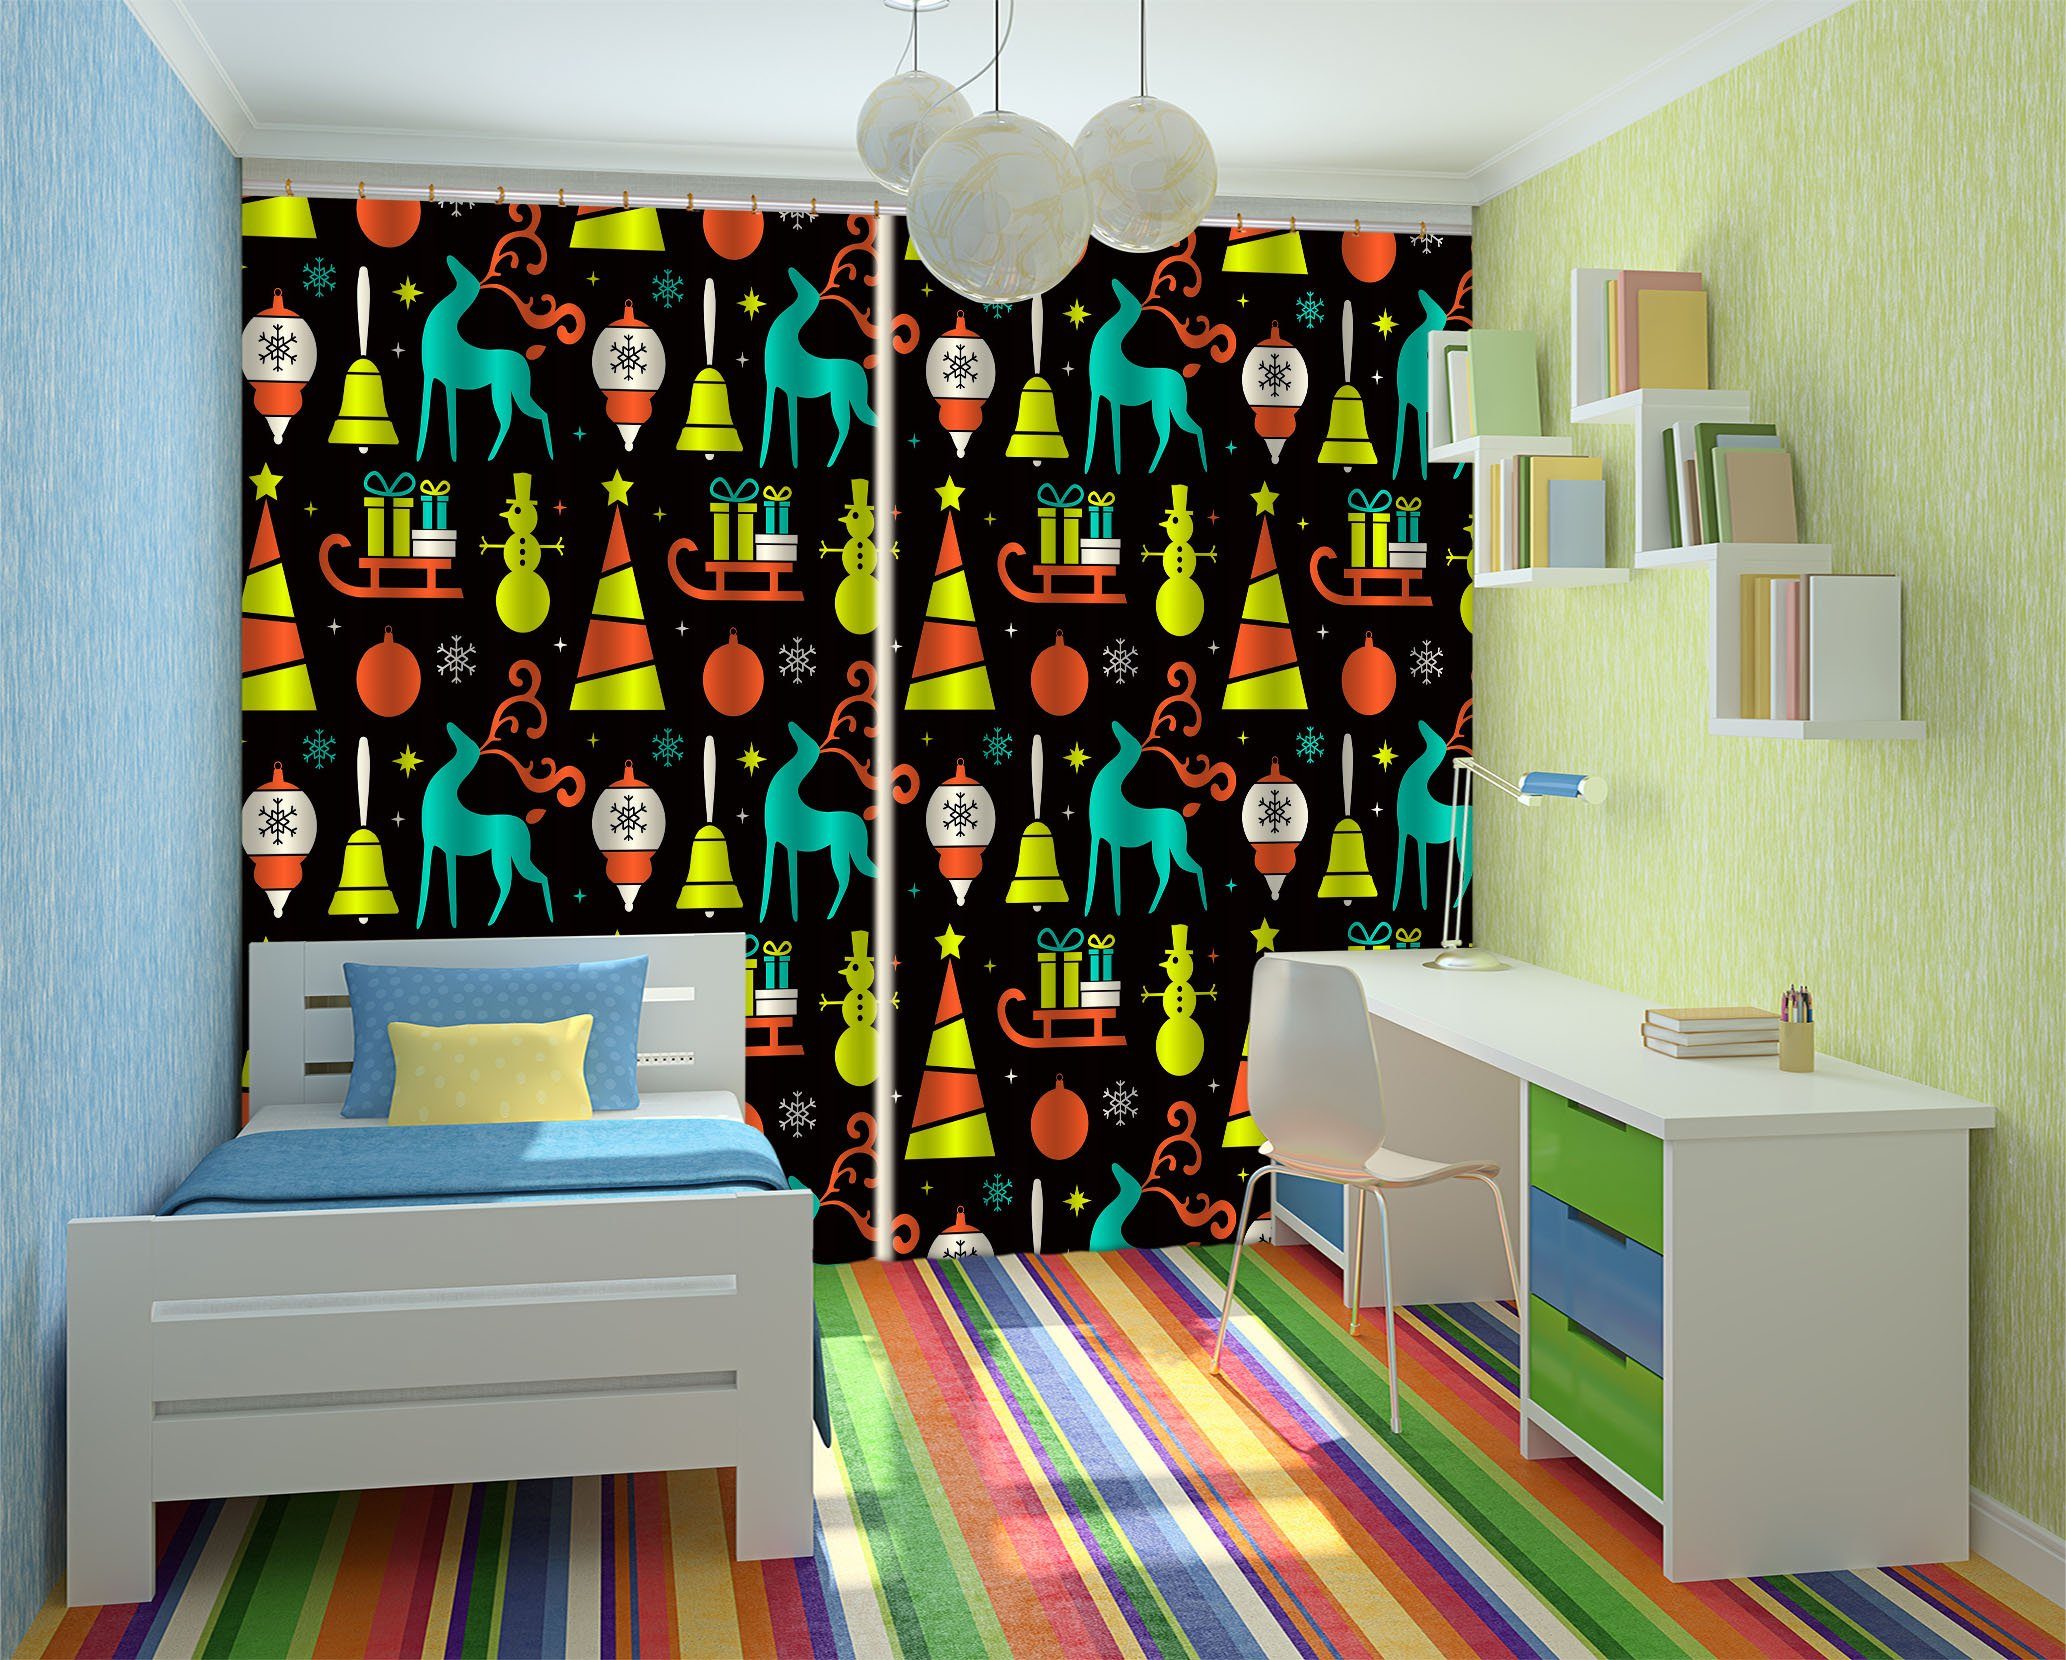 3D Patterned Sleigh Deer 67 Curtains Drapes Curtains AJ Creativity Home 